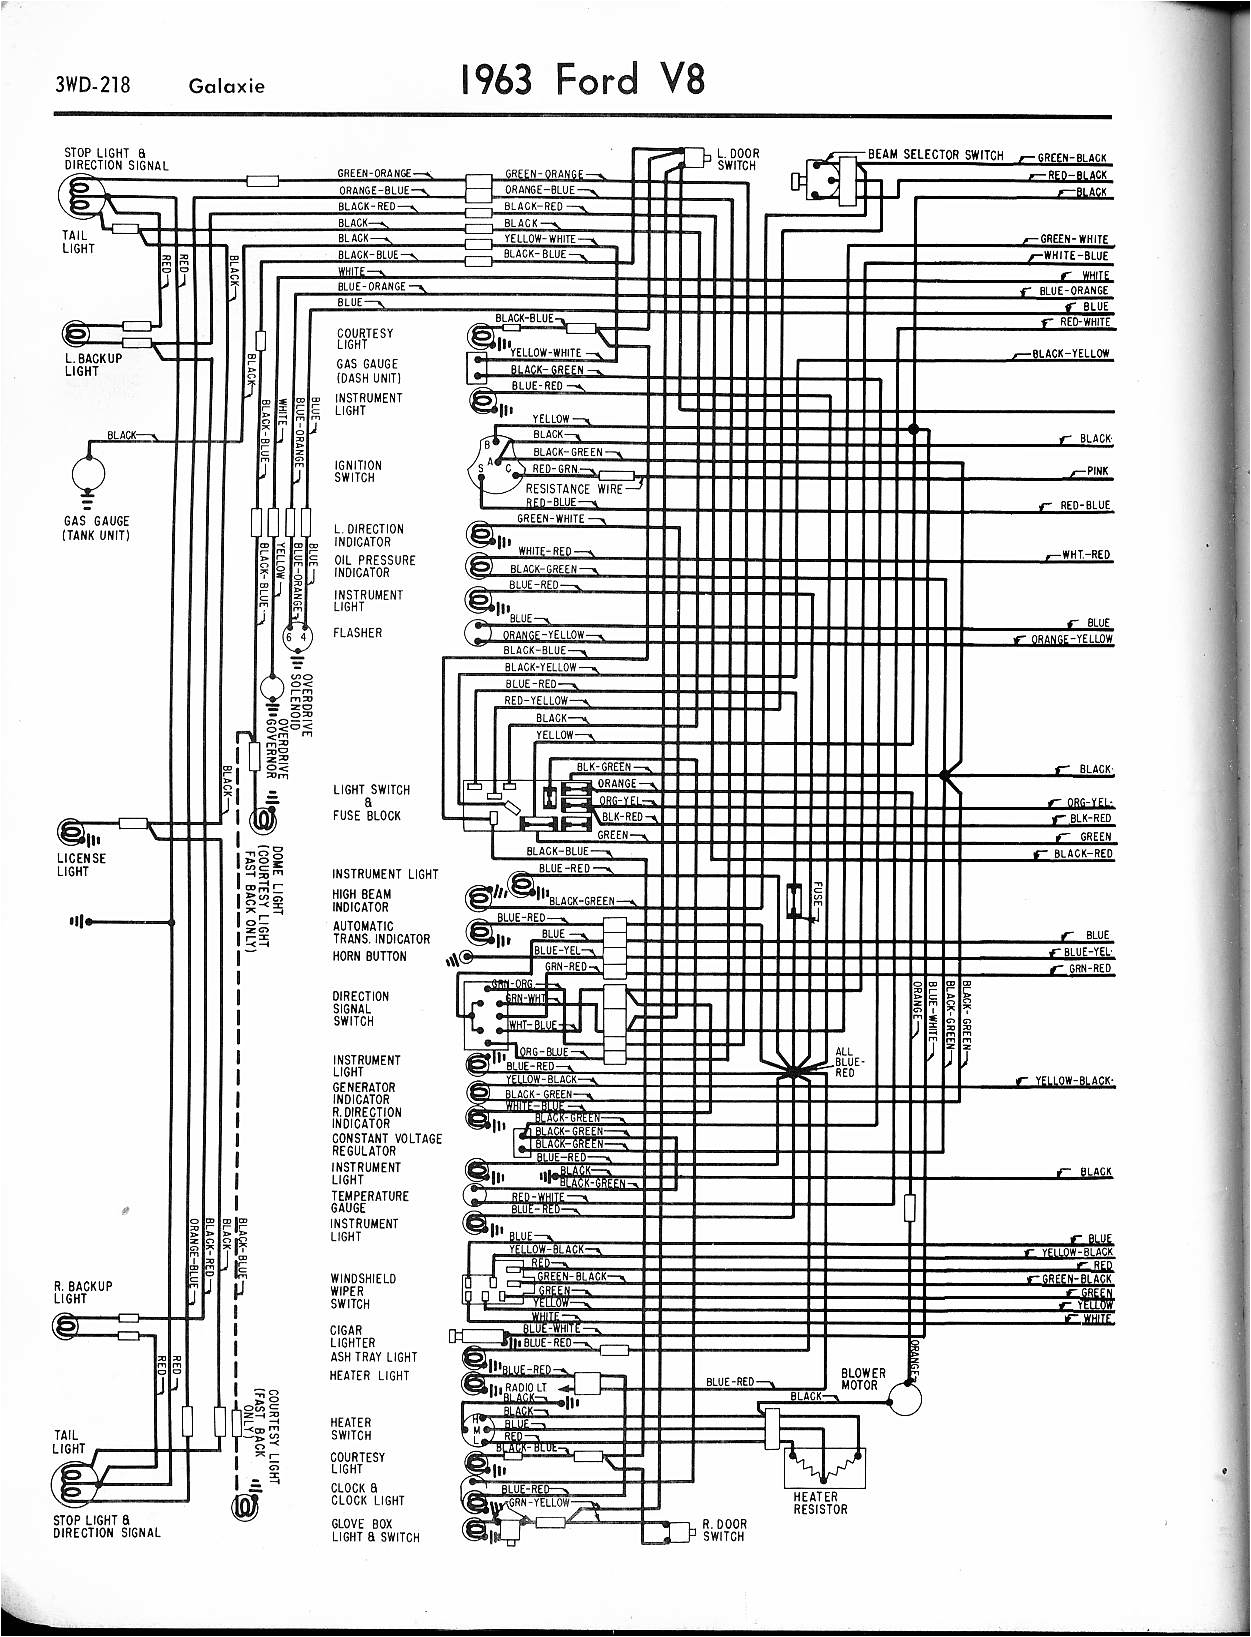 1963 ford wiring diagram